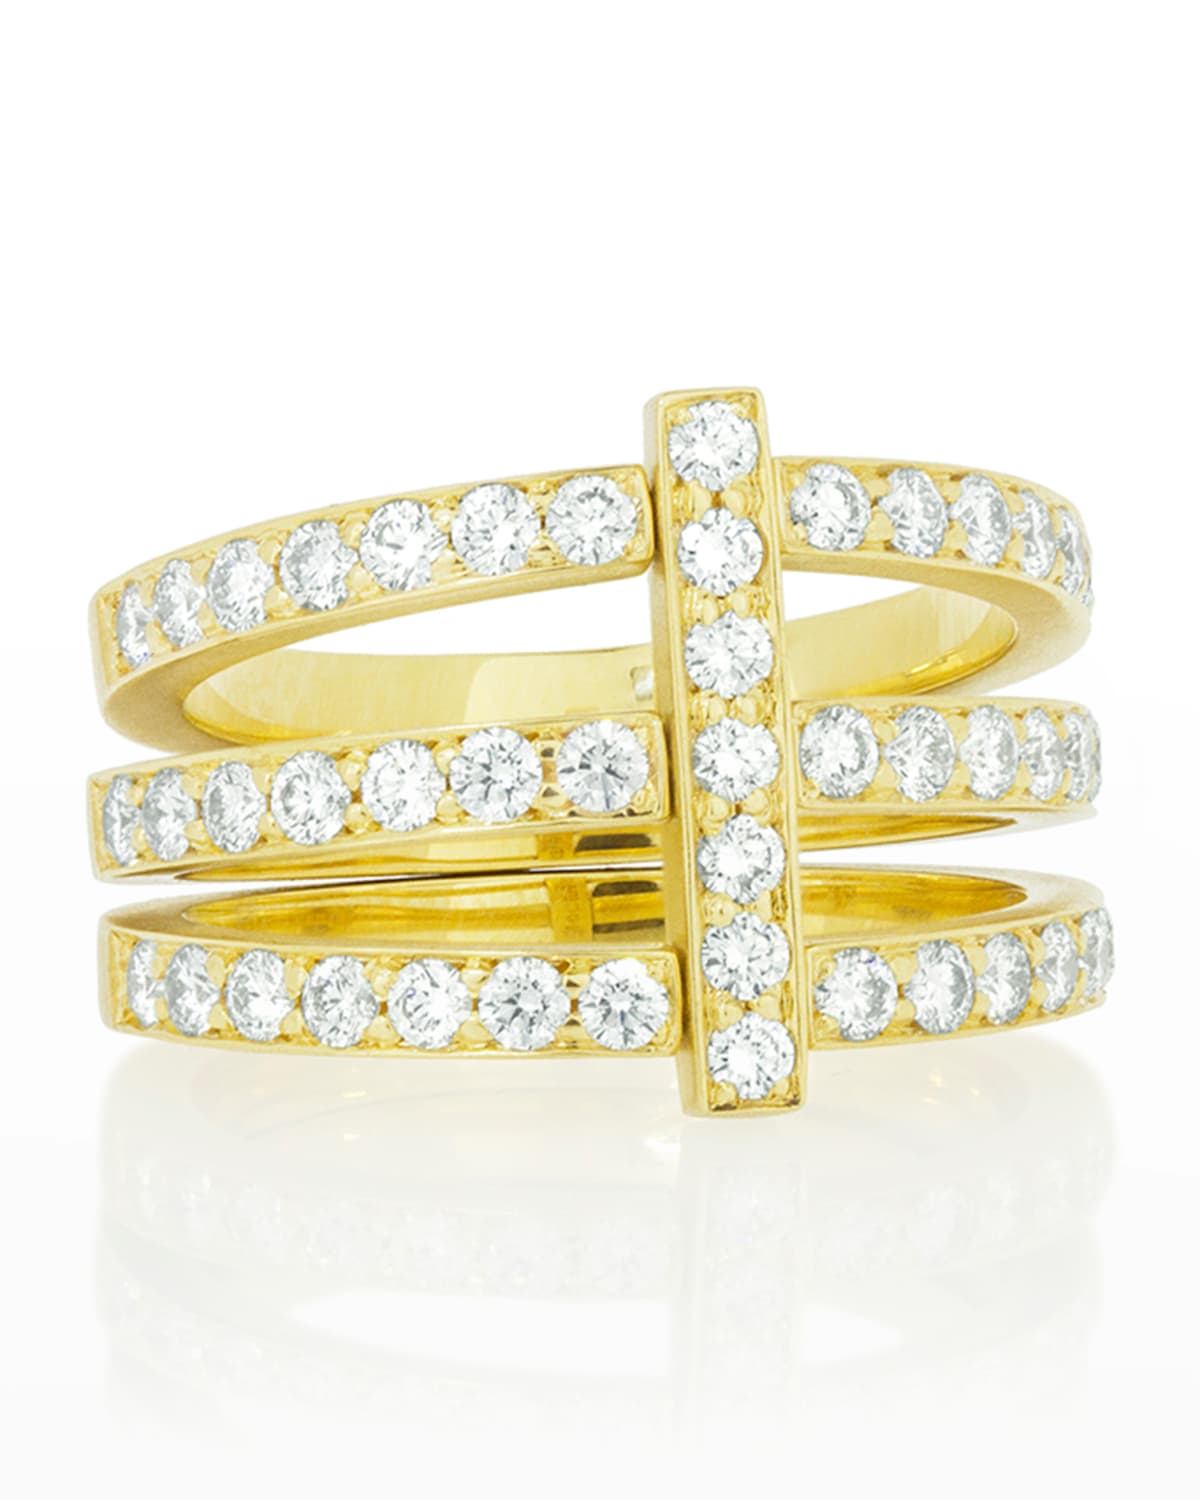 Moderne 18k Three-Row Diamond Ring, Size 6.5